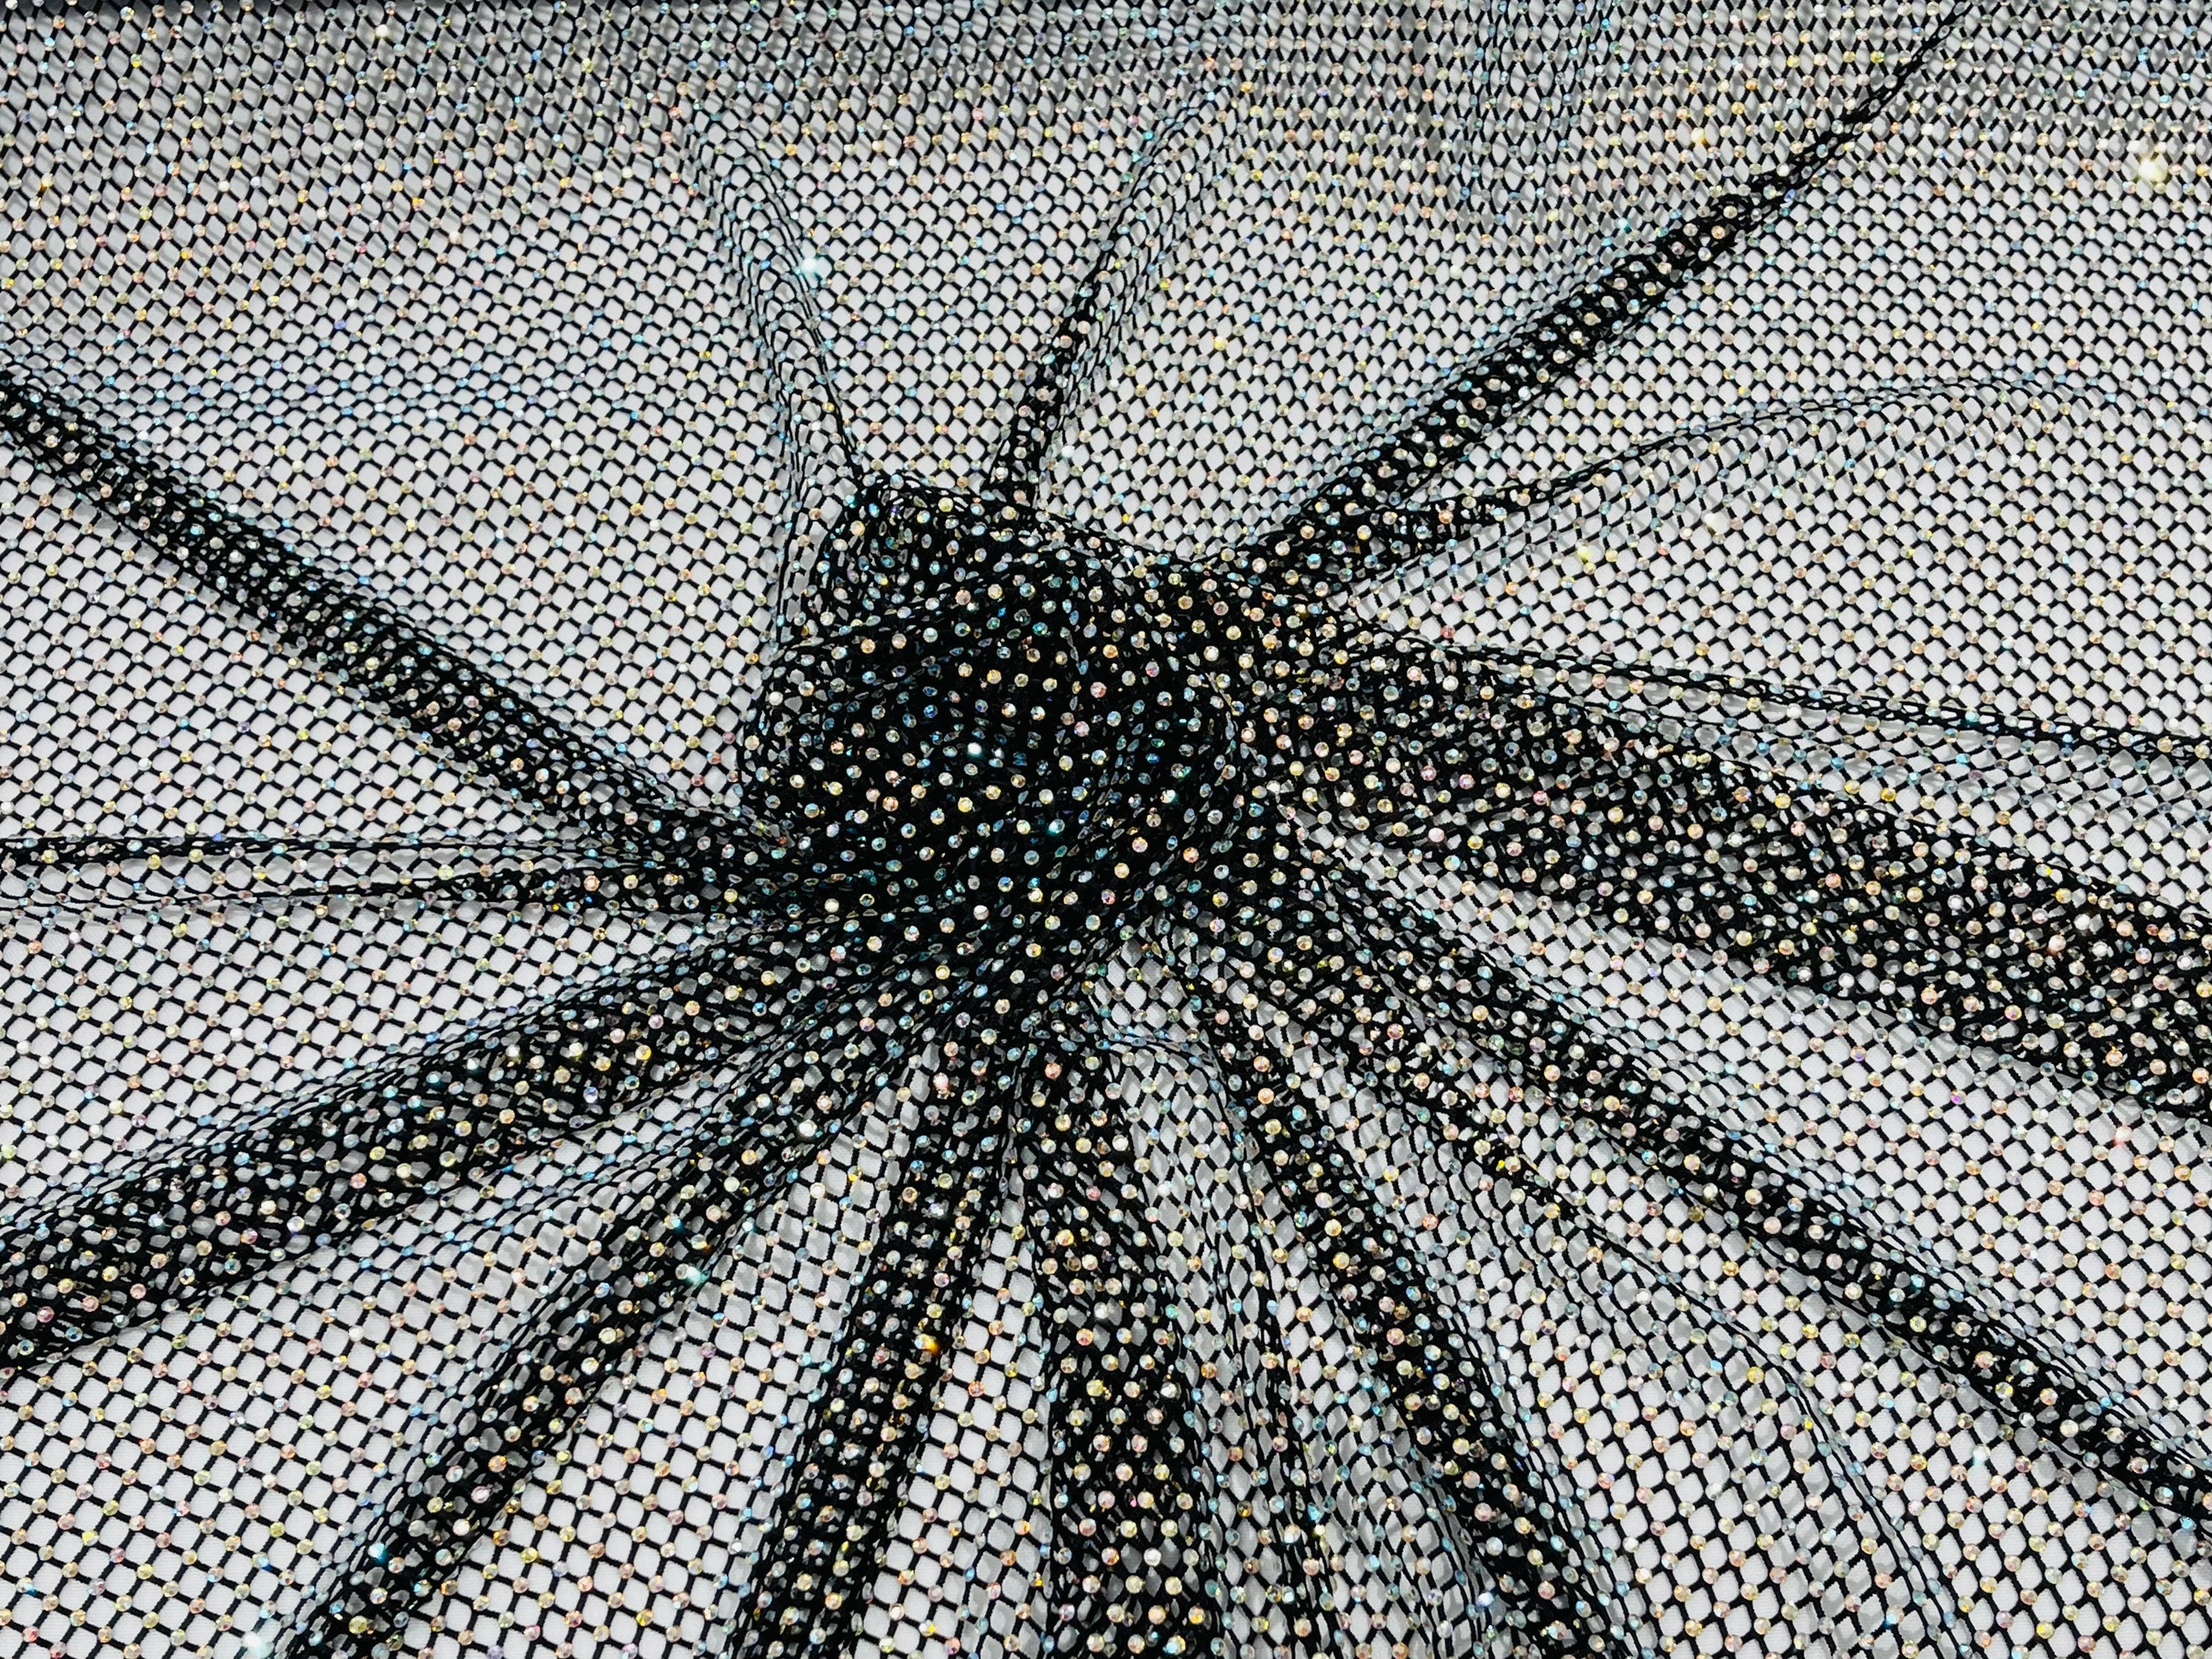 Infinite Diamonds in Black. Crochet Lace Fabric. WV-150-BLK – Boho